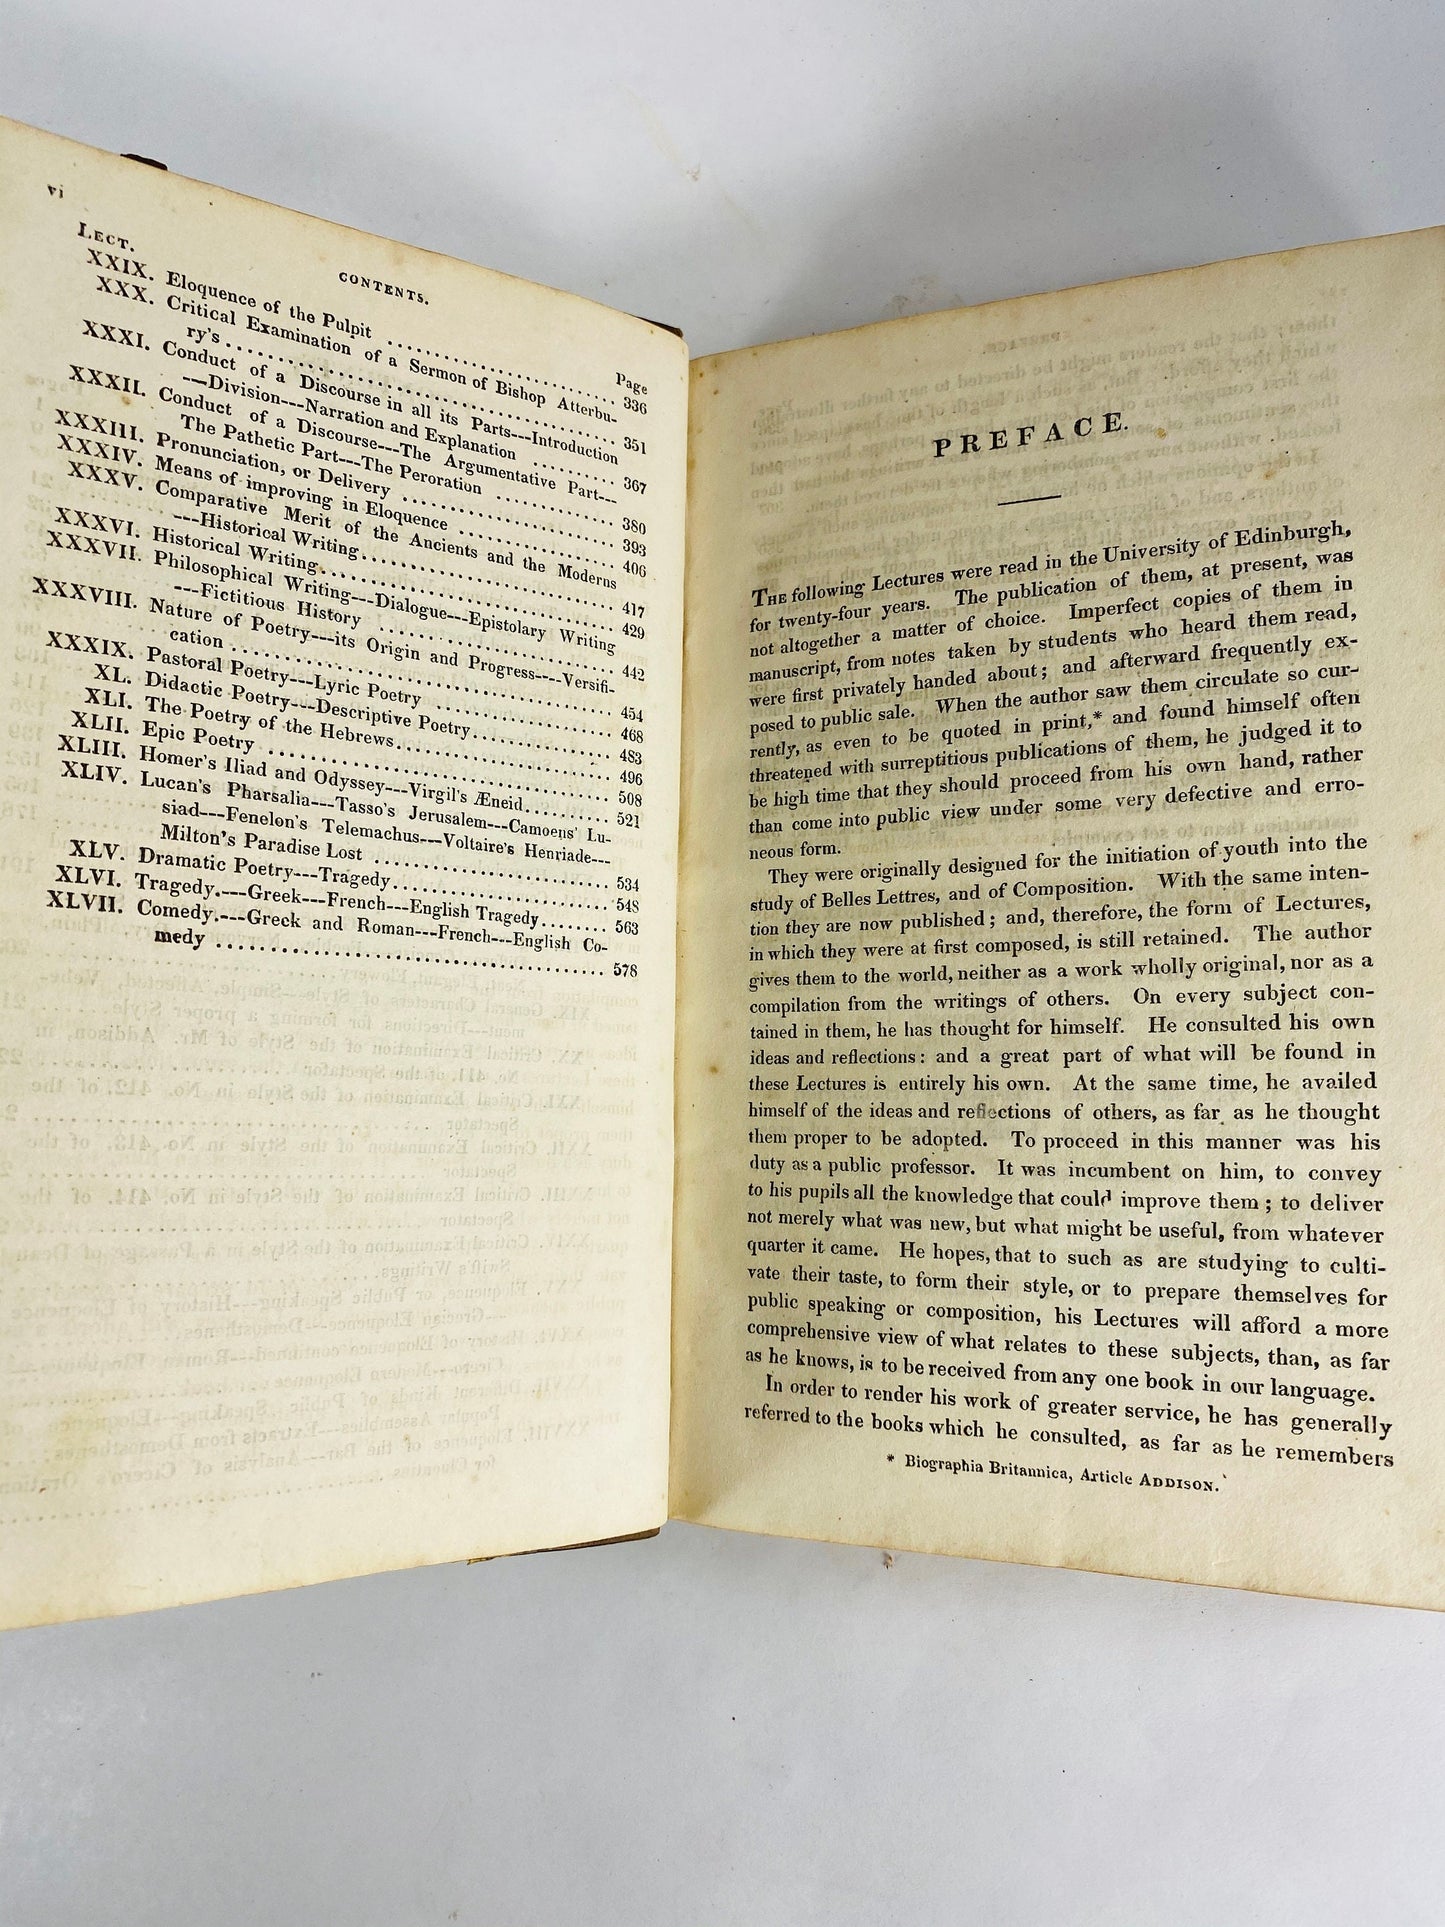 1827 Hugh Blair antique book of Sermons, Lectures & Rhetoric in one volume. Minister of the Church of Scotland, Edinburgh professor